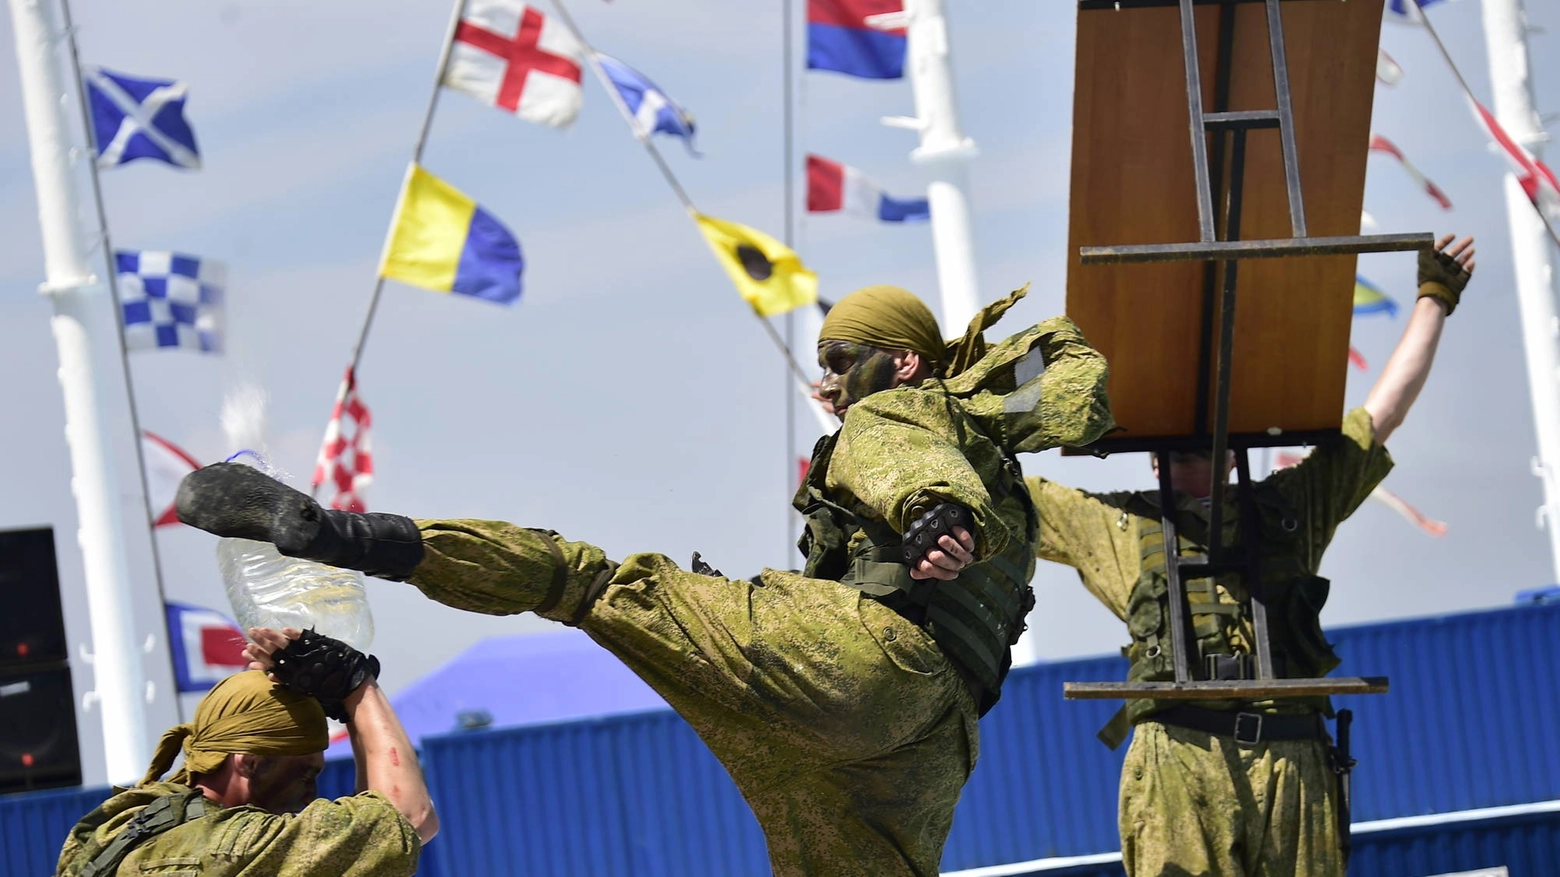 Celebrazioni militari in Russia (Olycom)